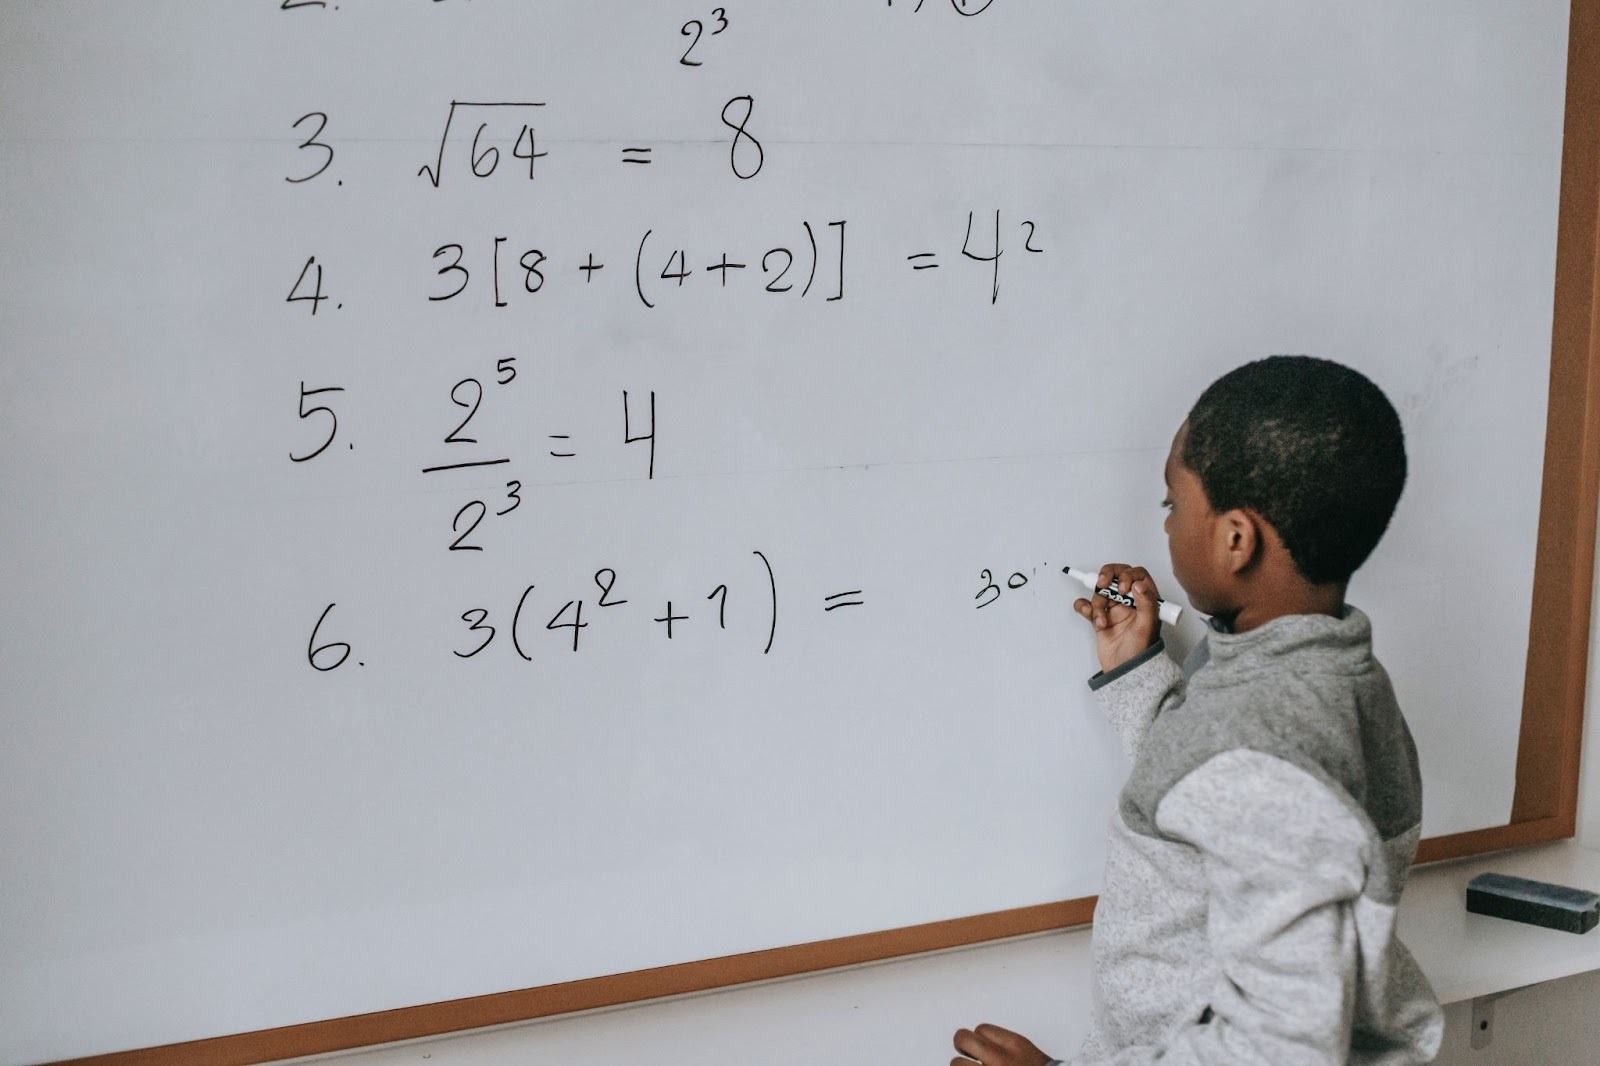 The Mathematics Curriculum. Helping Children Master Basic Math